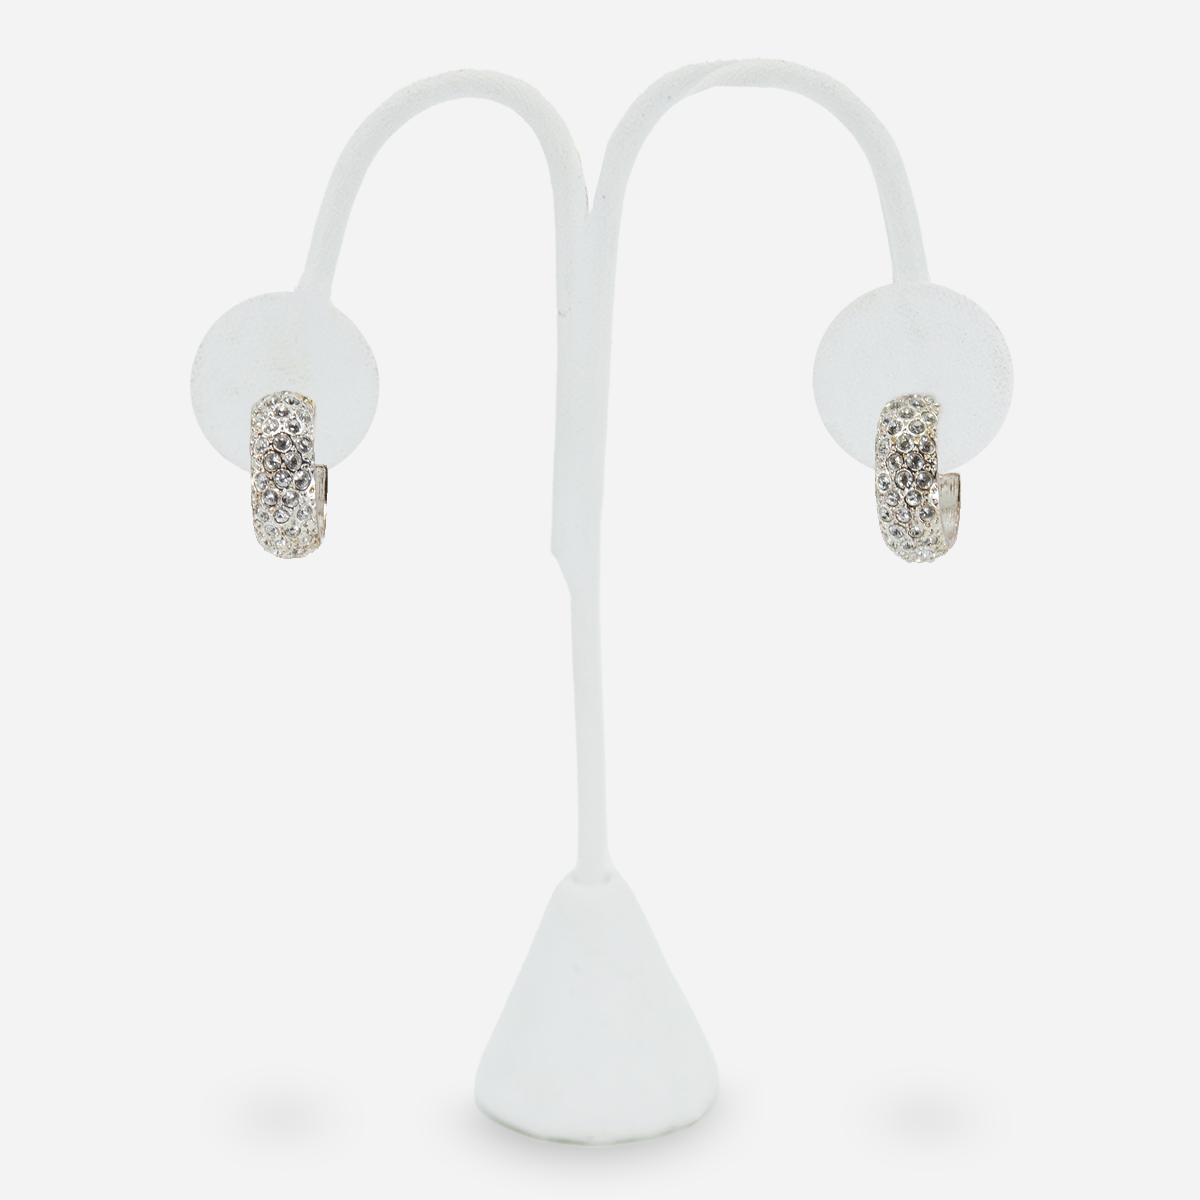 Ralph Lauren Crystal earrings